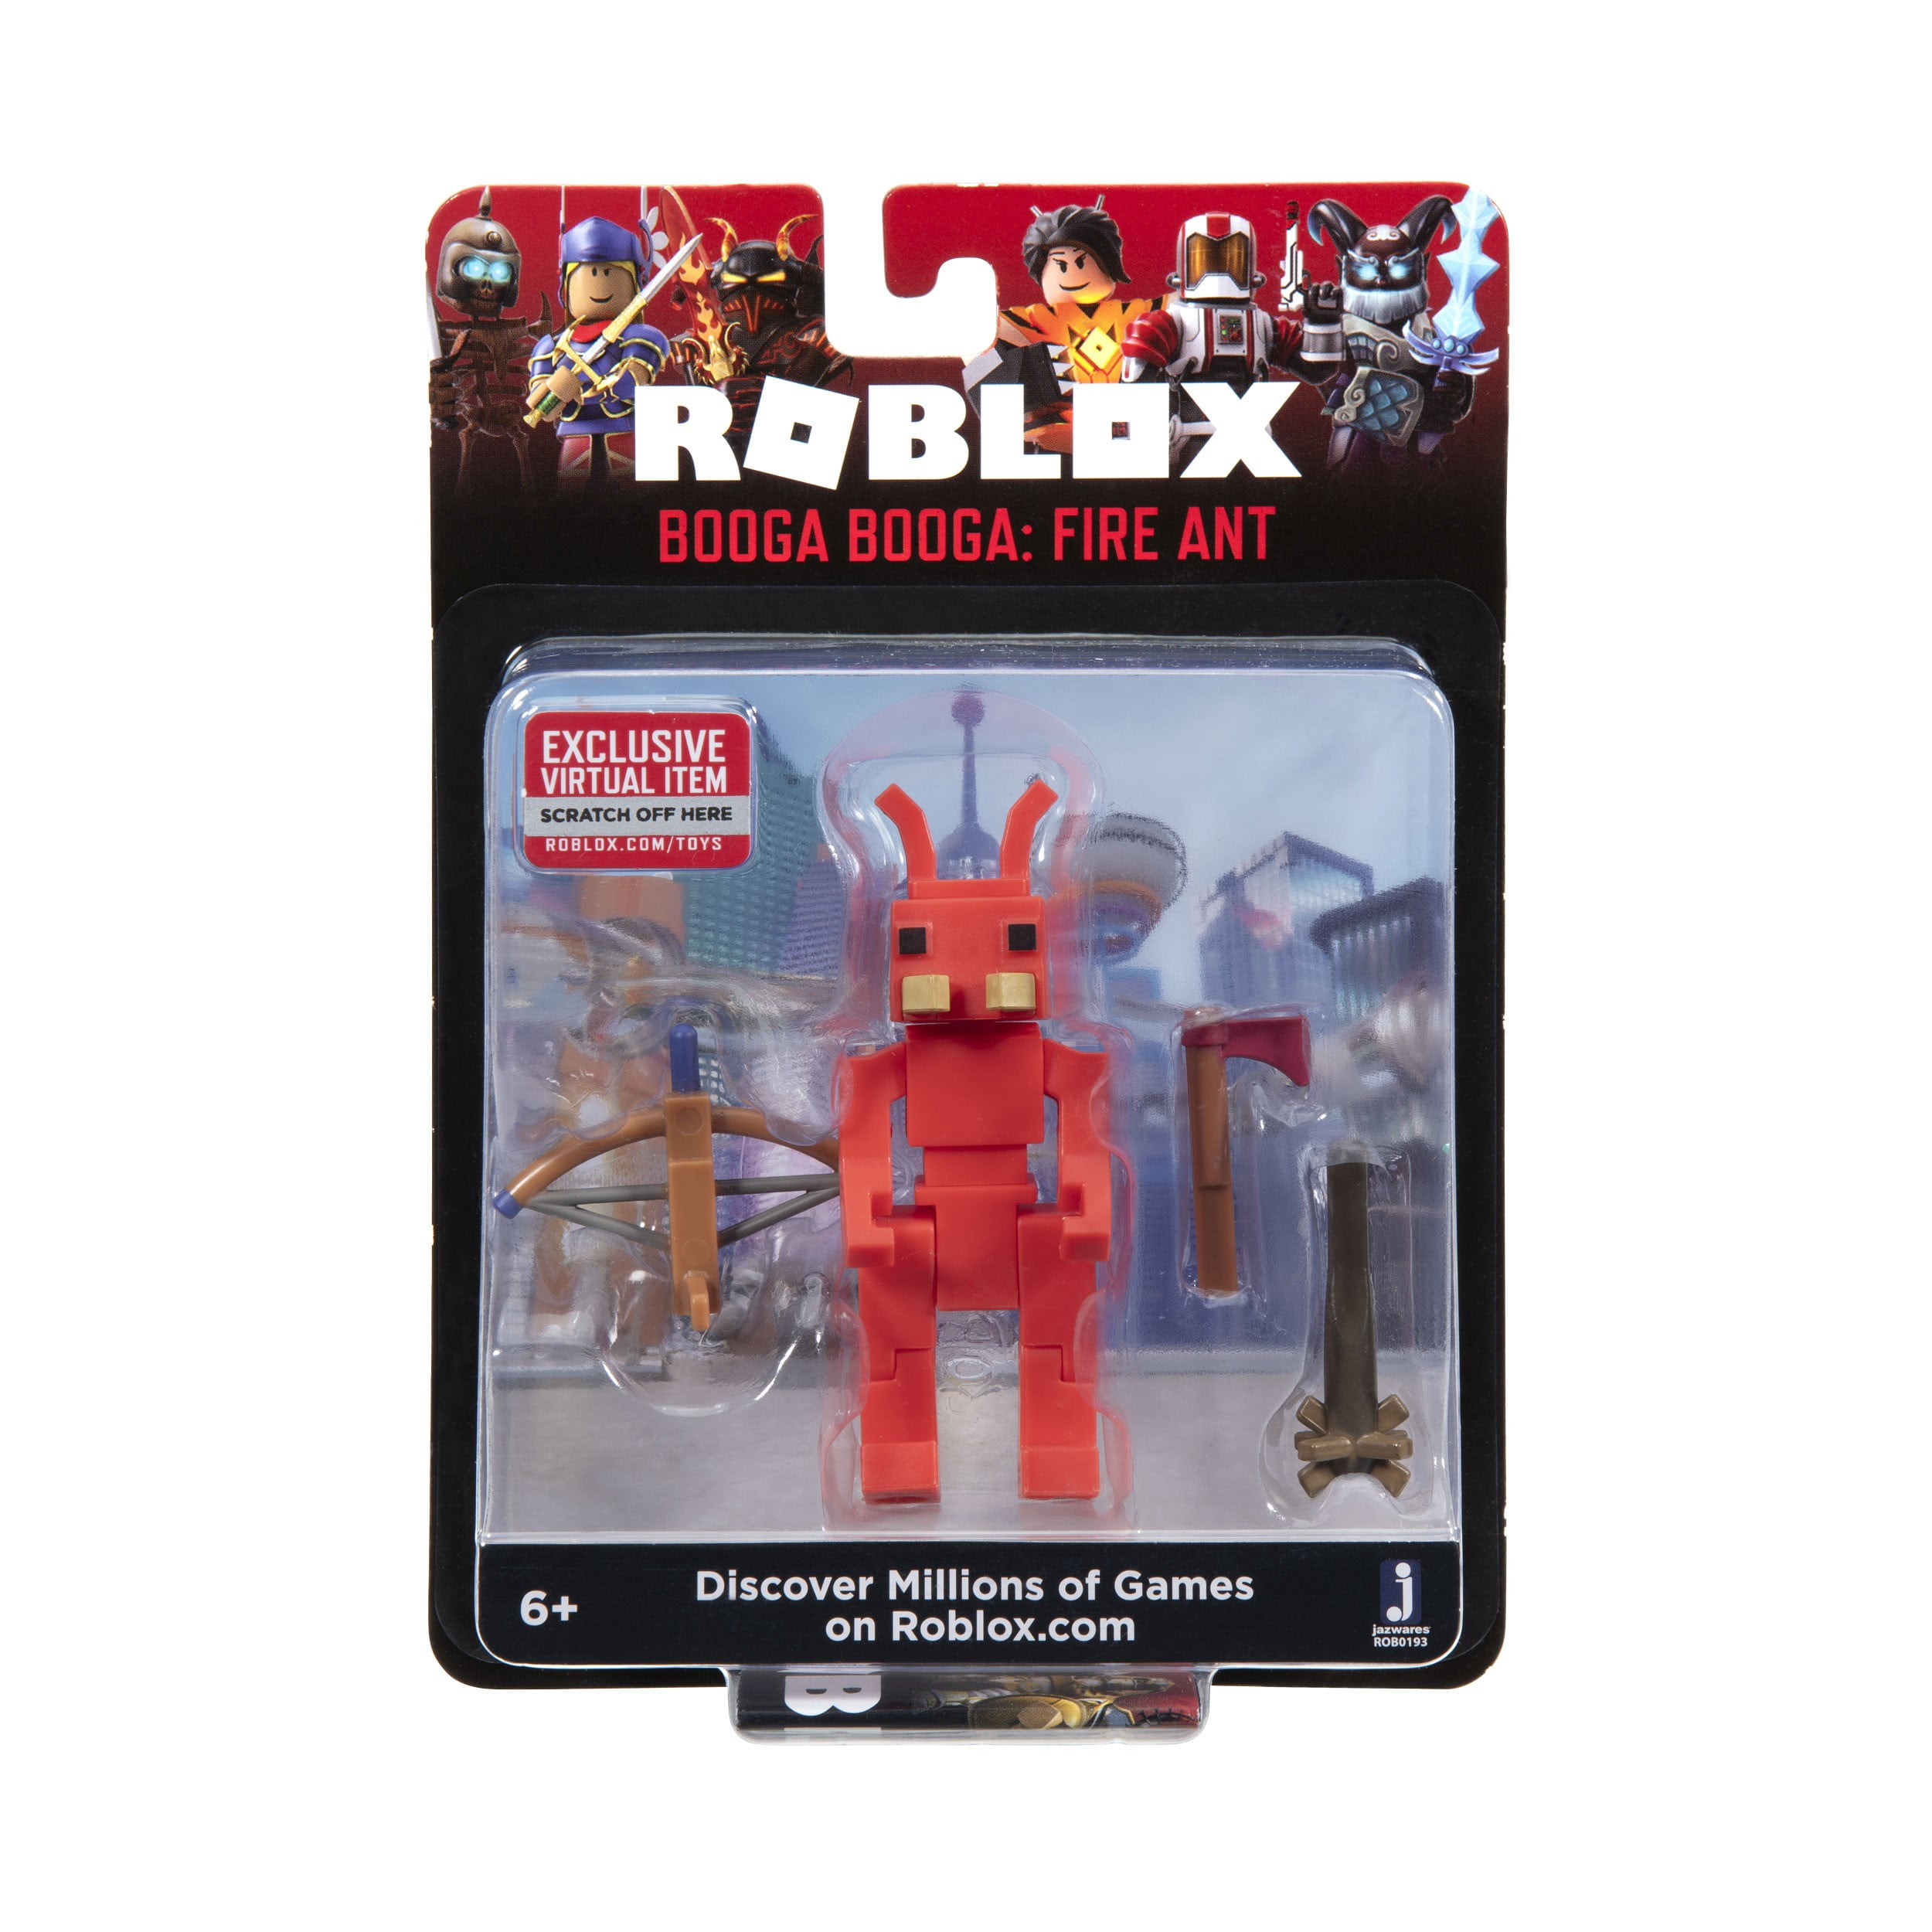 Roblox Action Collection Booga Booga Fire Ant Figure Pack Includes Exclusive Virtual Item Walmart Com Walmart Com - fire lion roblox